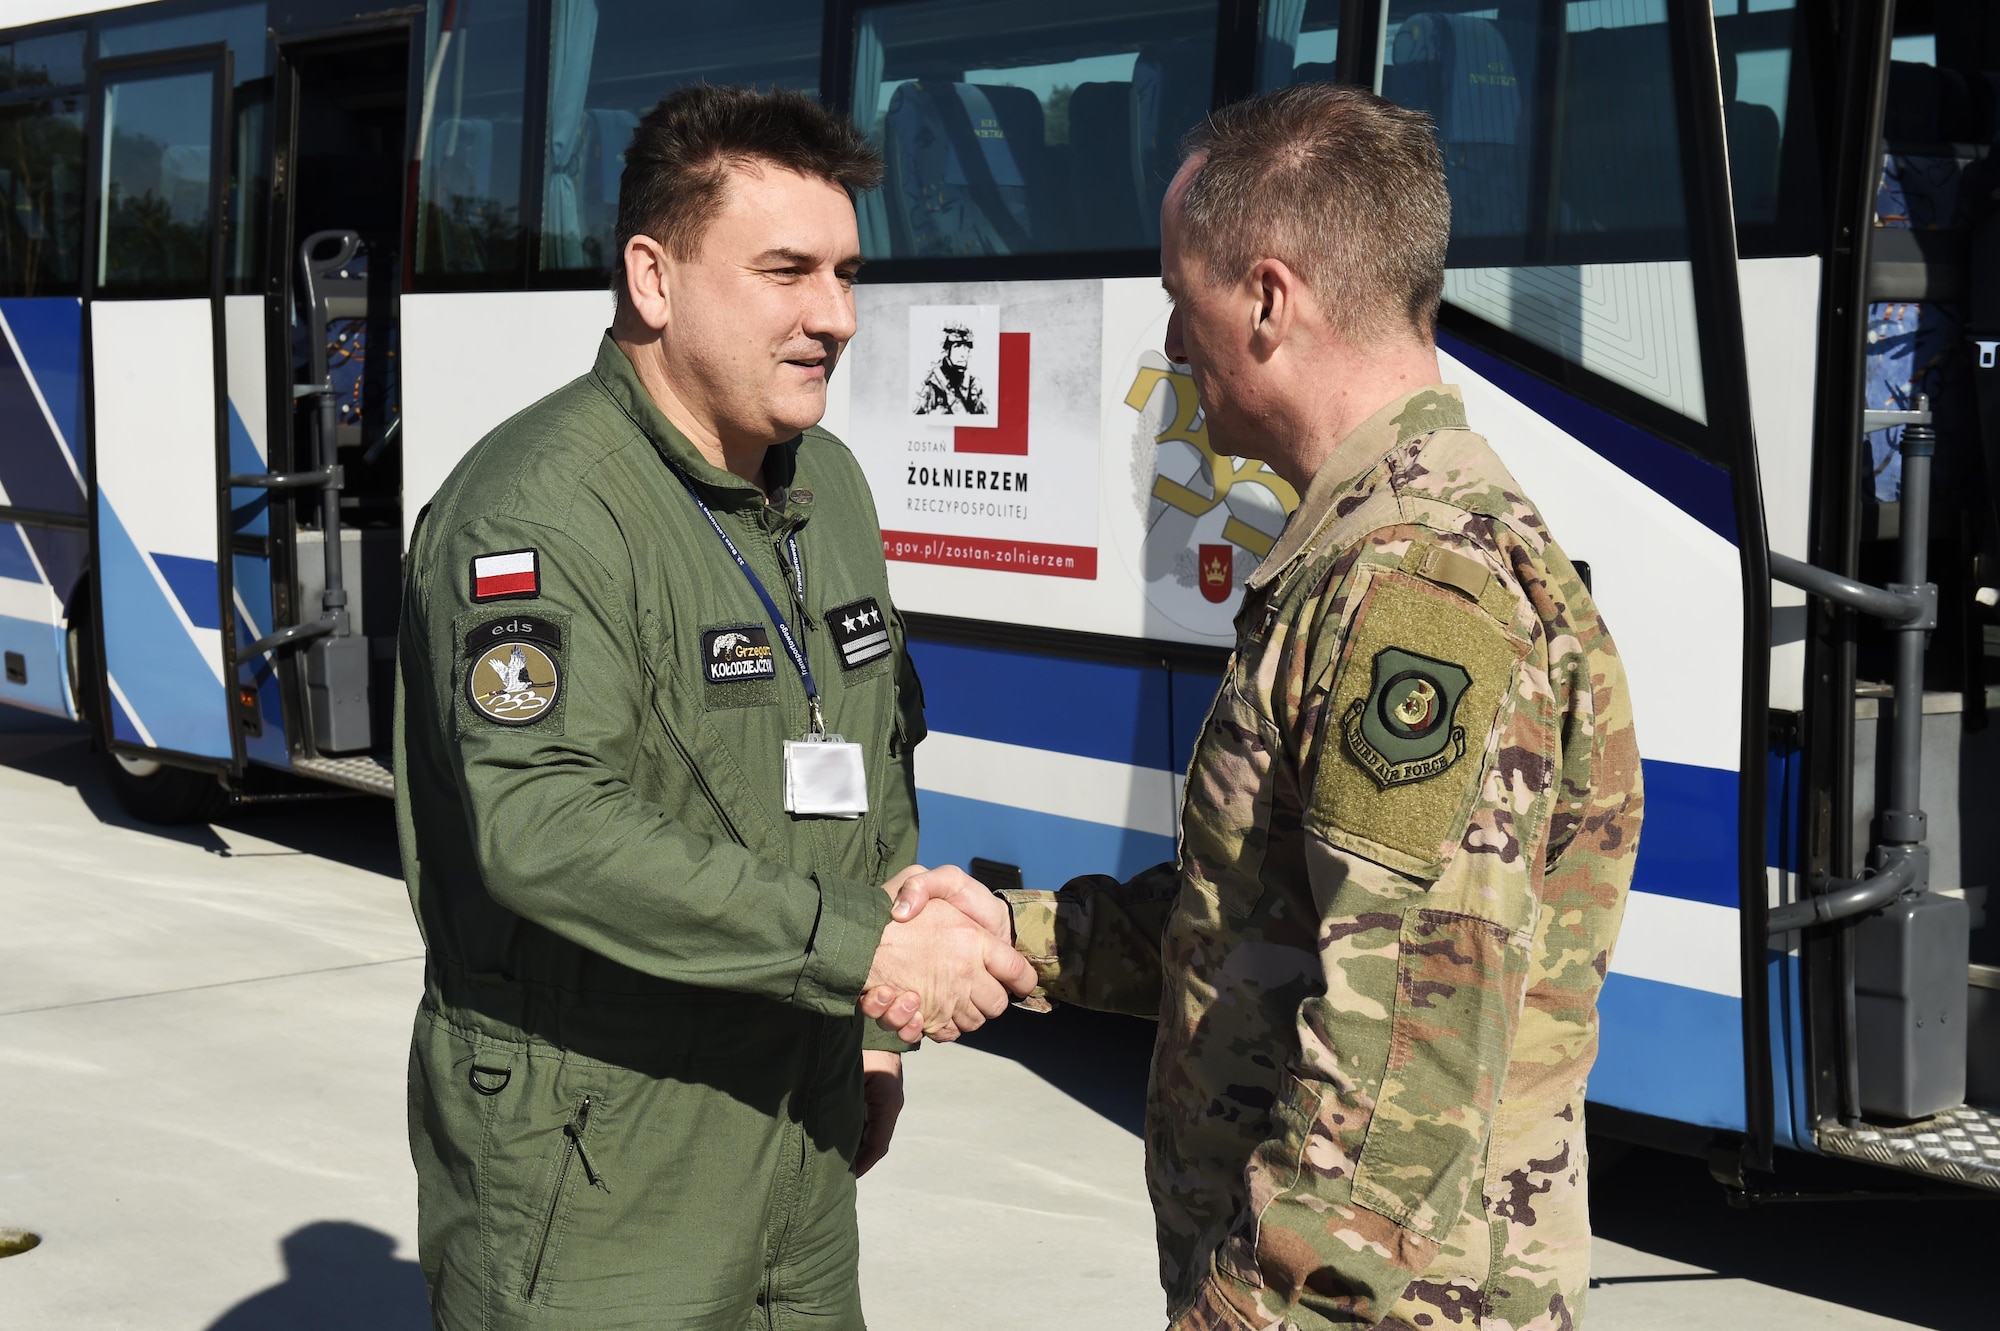 Third Air Force Commander, Command Chief visit Detachment 1 Airmen in Poland